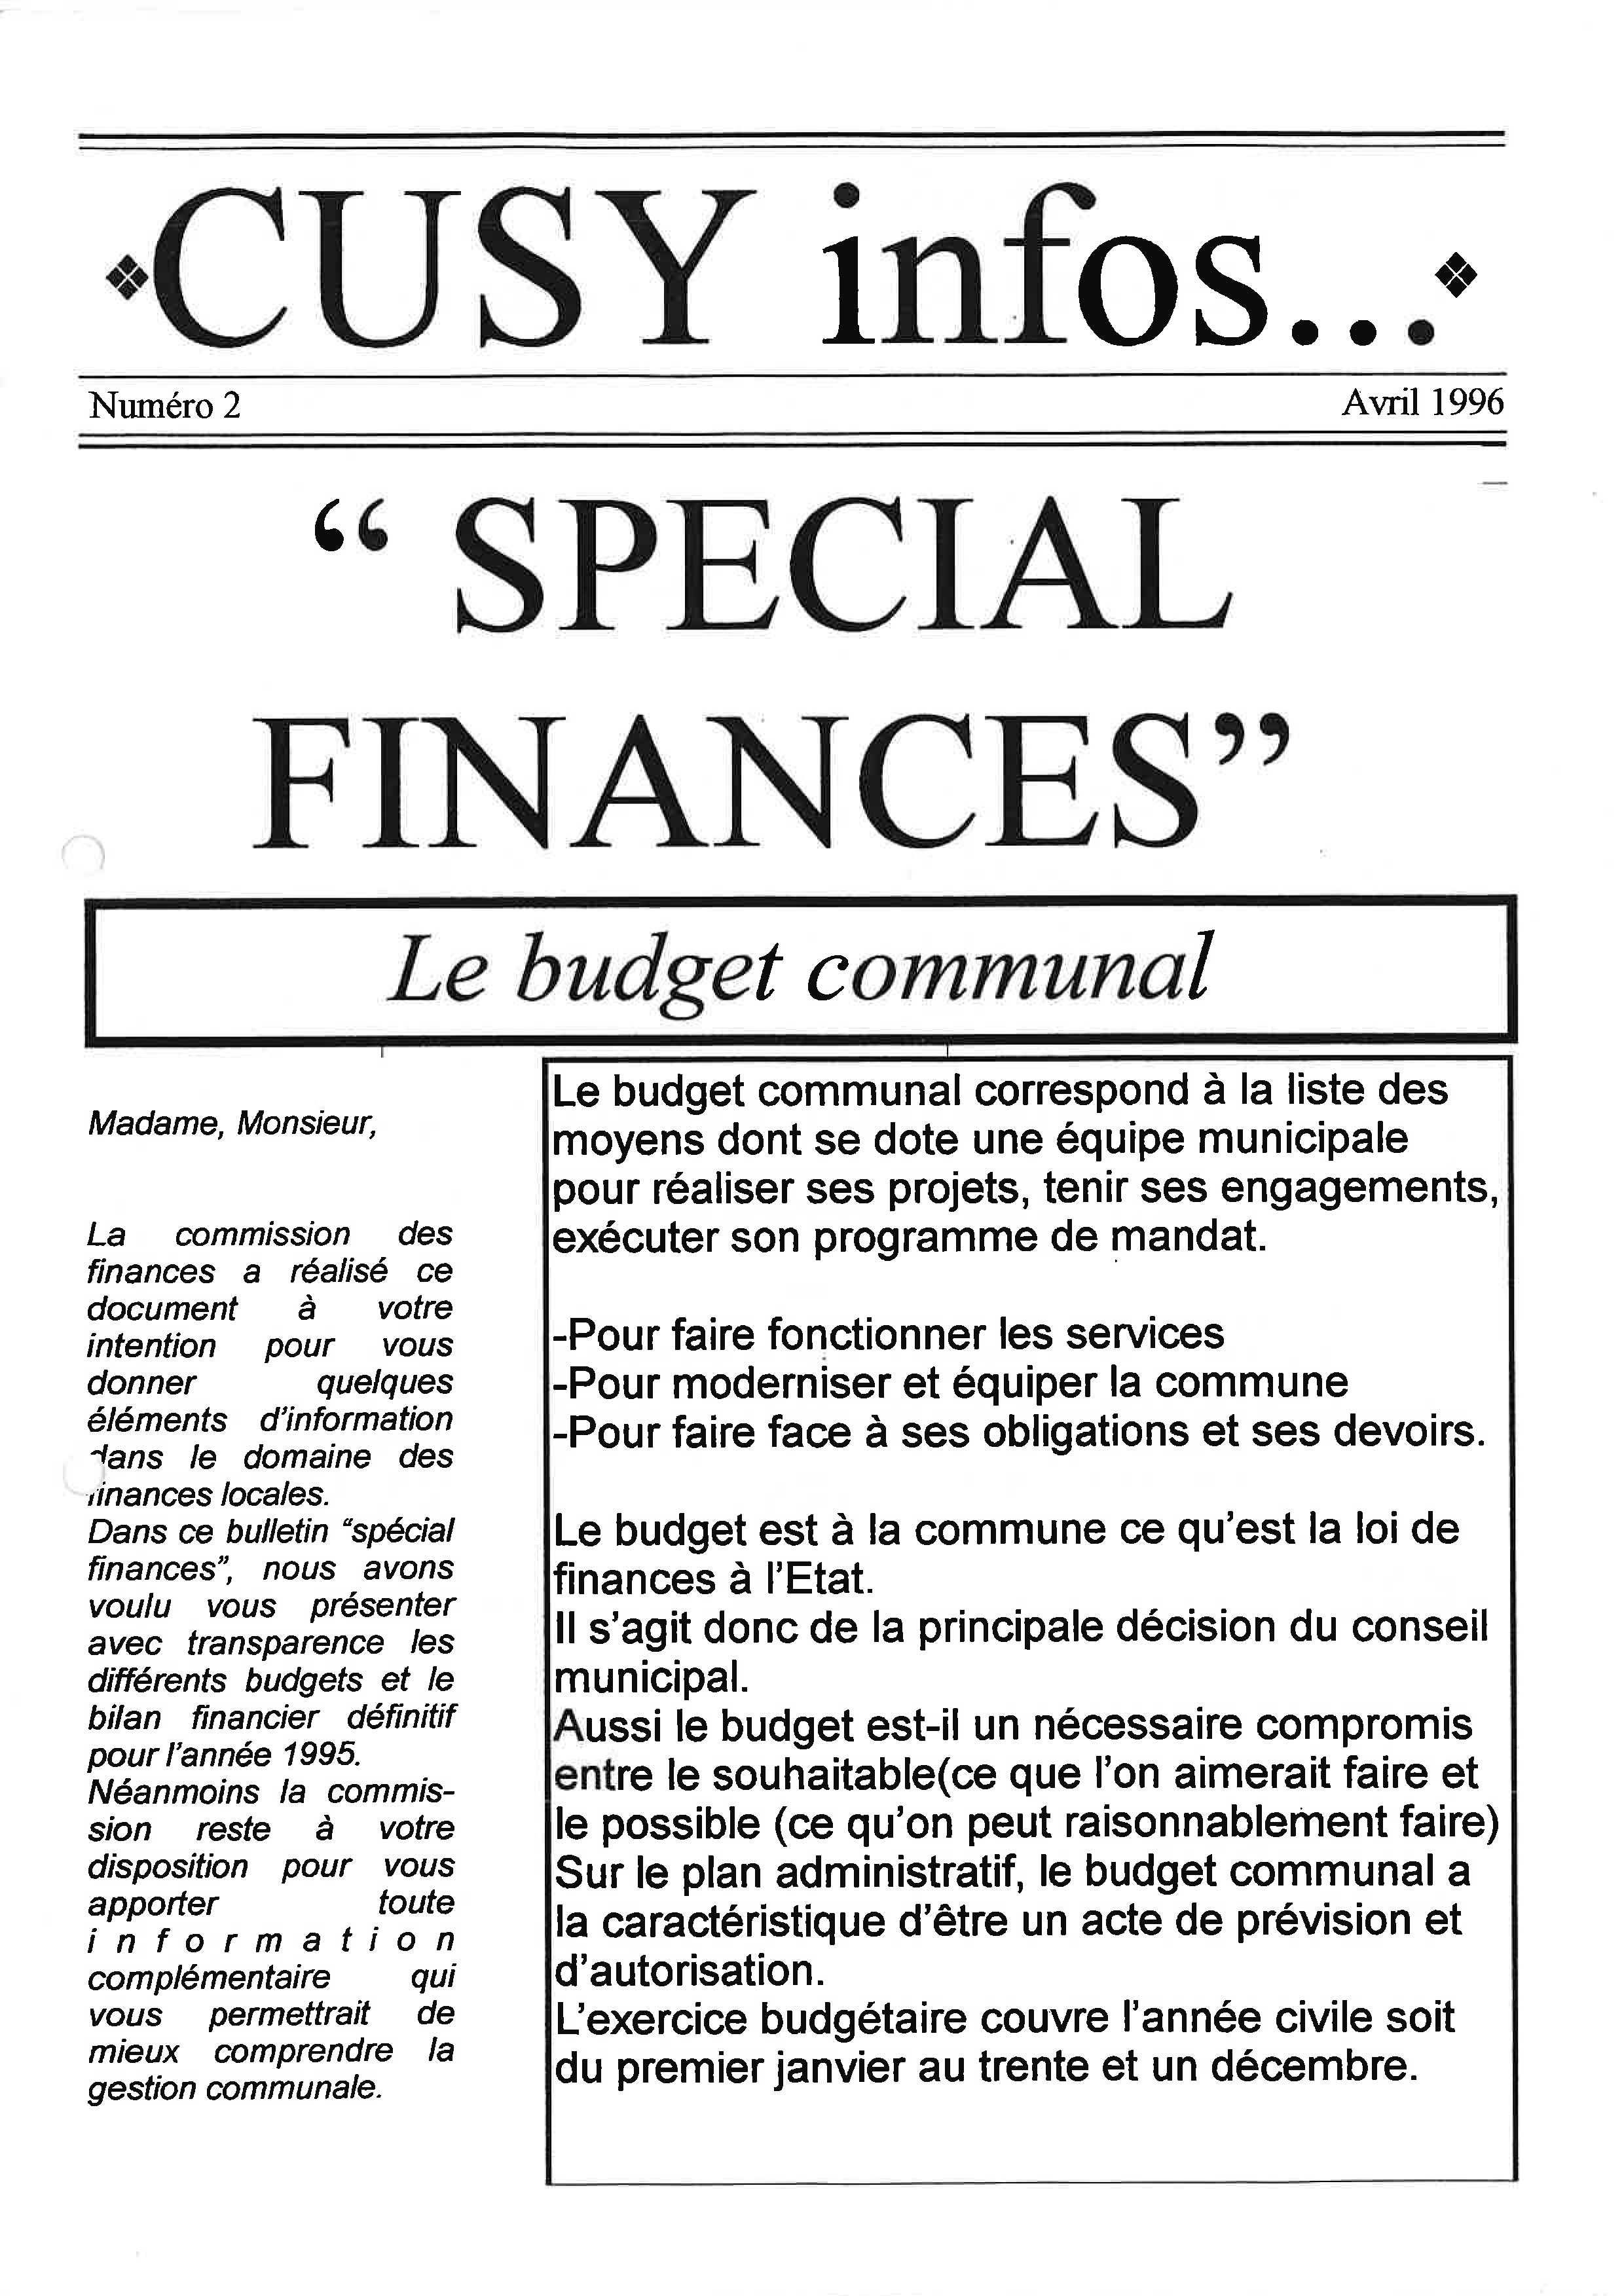 1996 04 Cusy infos spécial finances n°2_Page_1.jpg